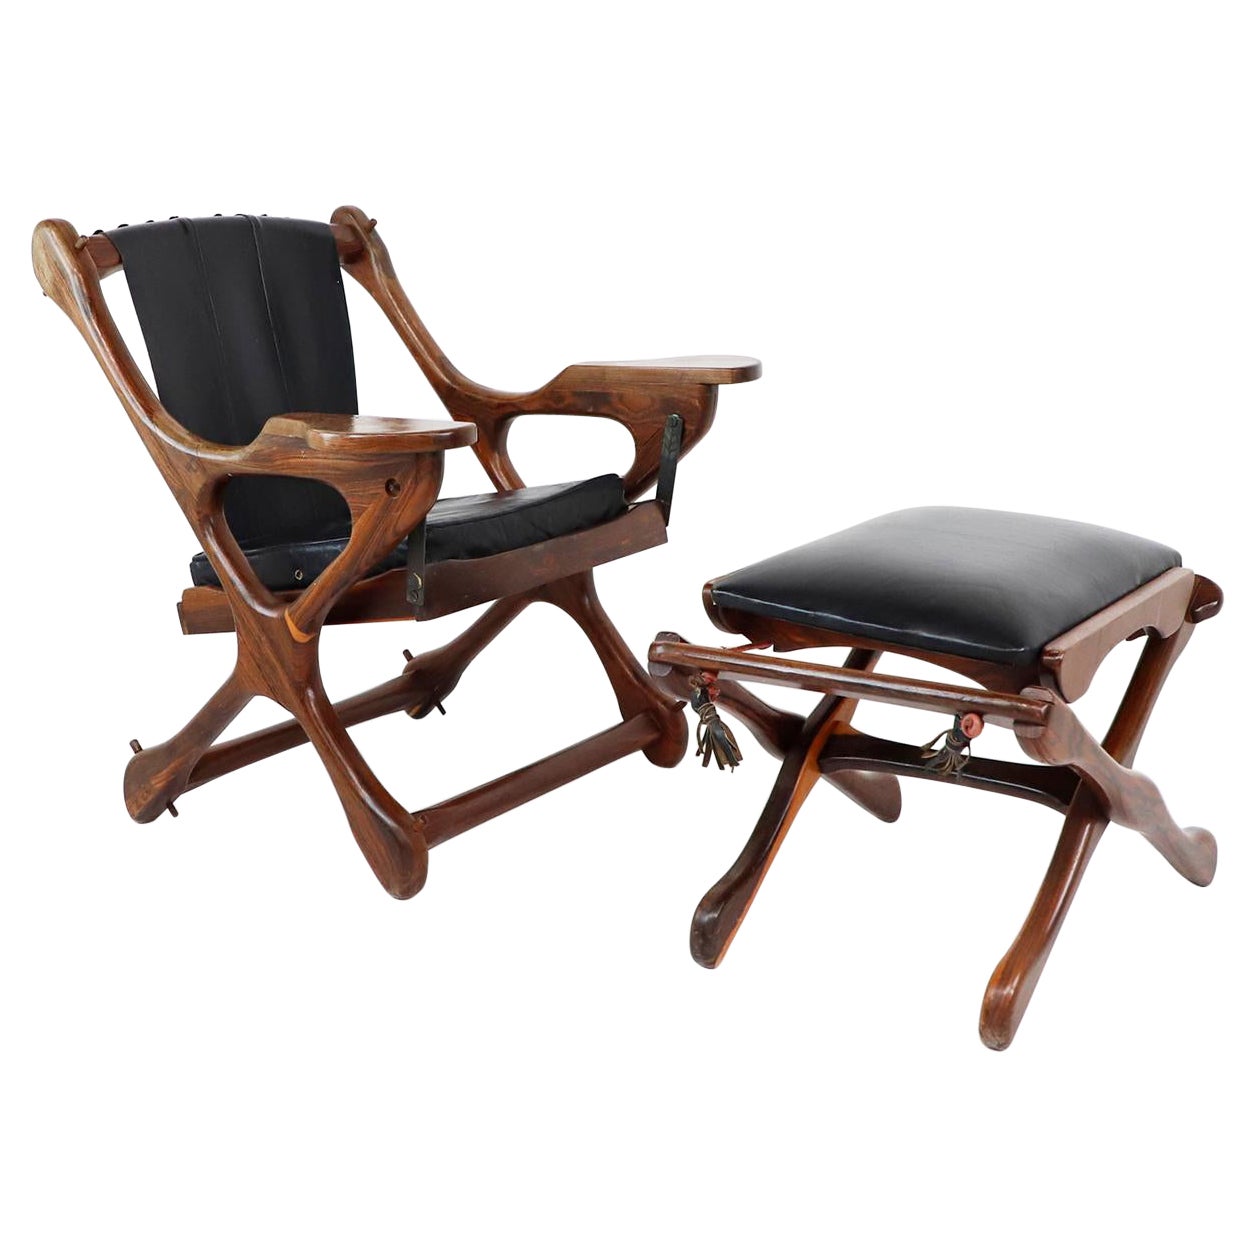 Don Shoemaker for Senal S.A. Cocobolo Swinger Chair and Ottoman, Original Label